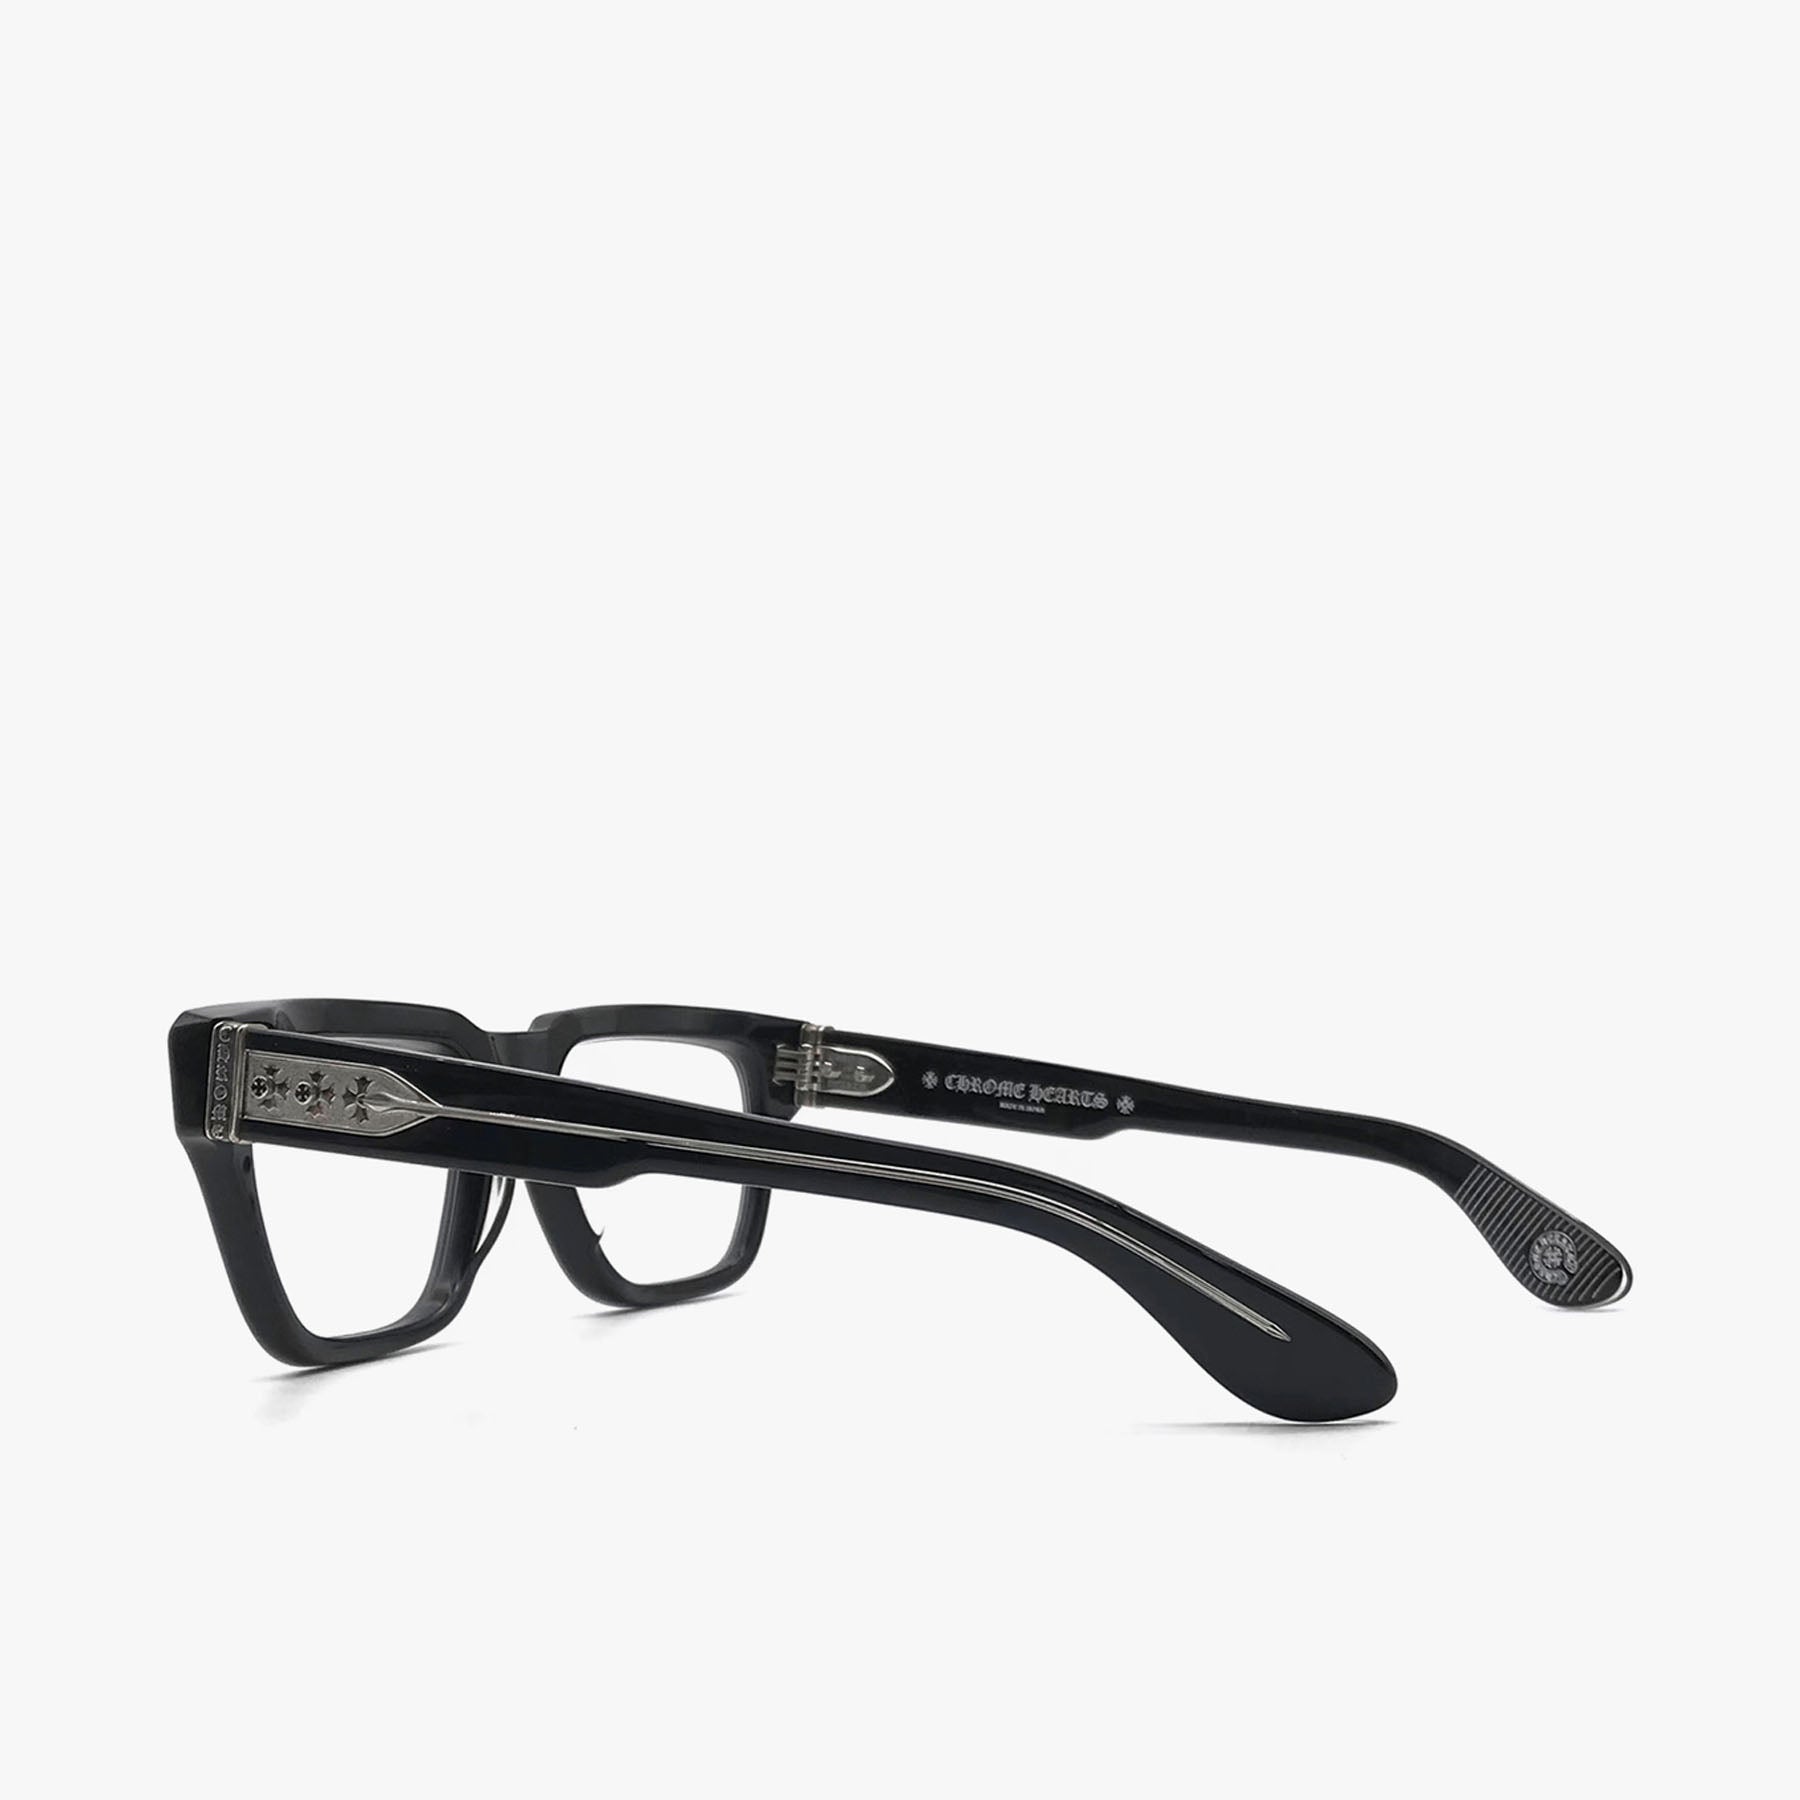 Chrome Hearts Midixathrill I BK Black & Silver Glasses Frame - SHENGLI ROAD MARKET